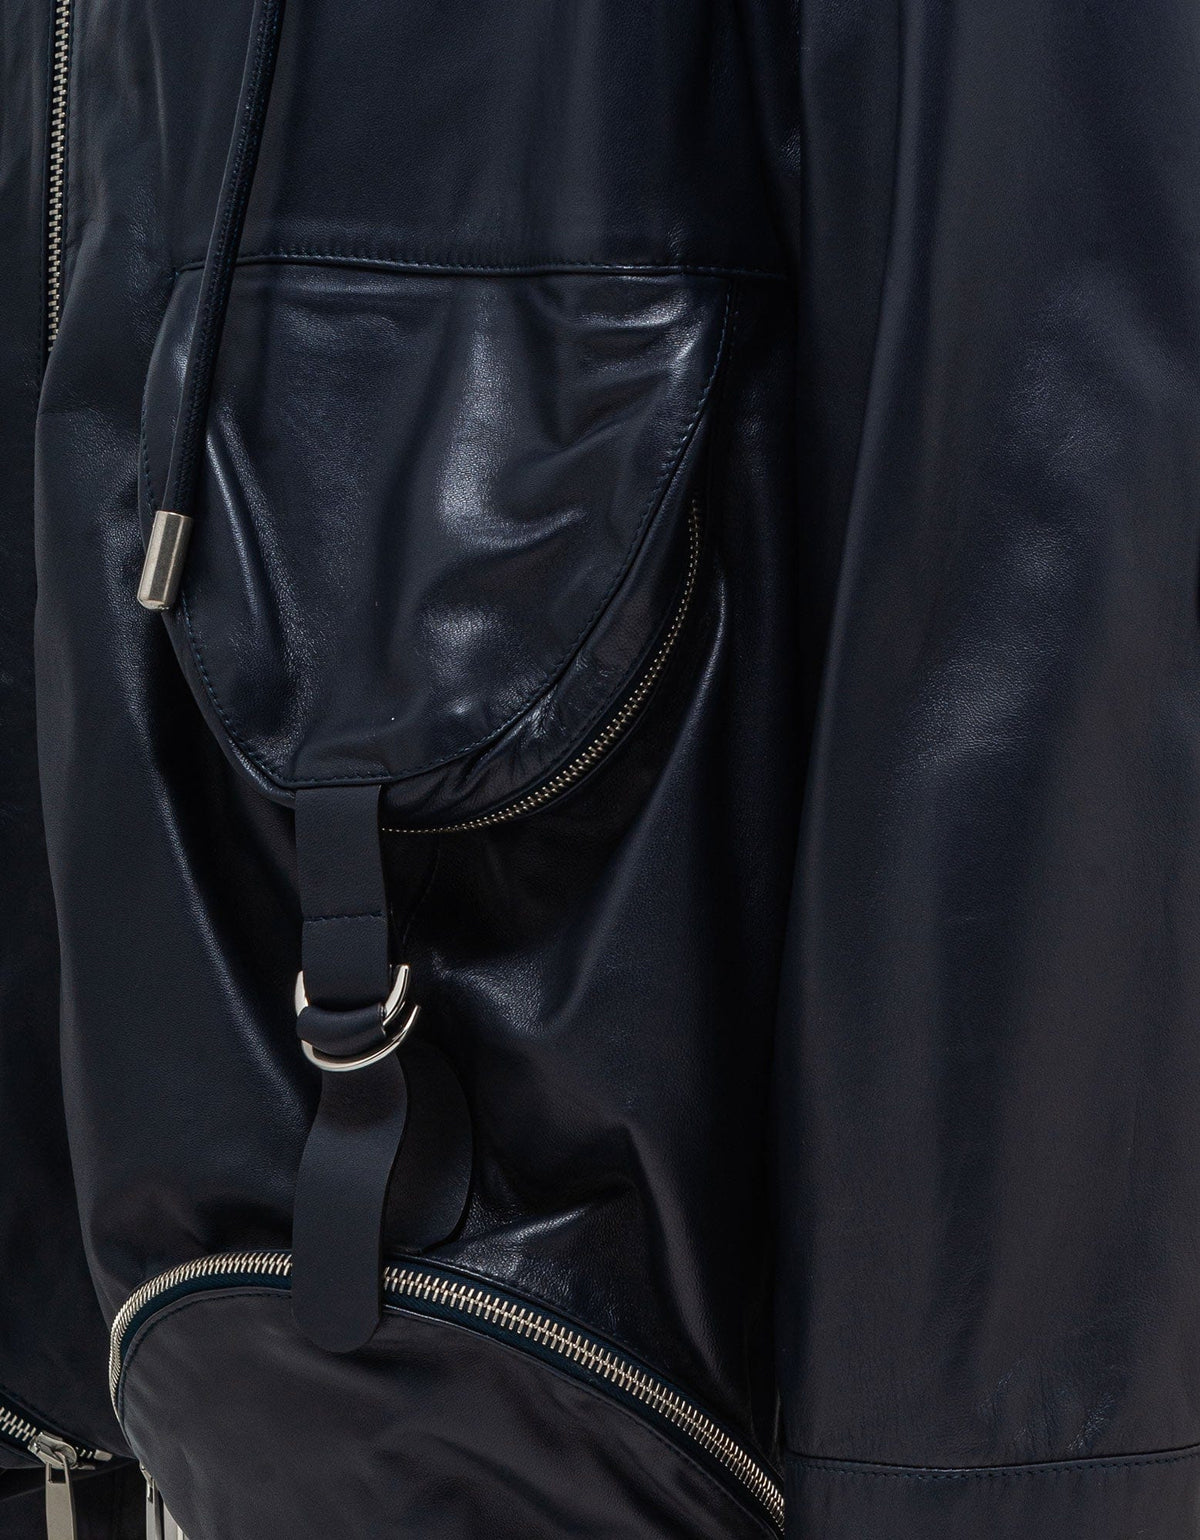 Off-White Navy Blue Arrow Multi Pocket Zip Leather Jacket